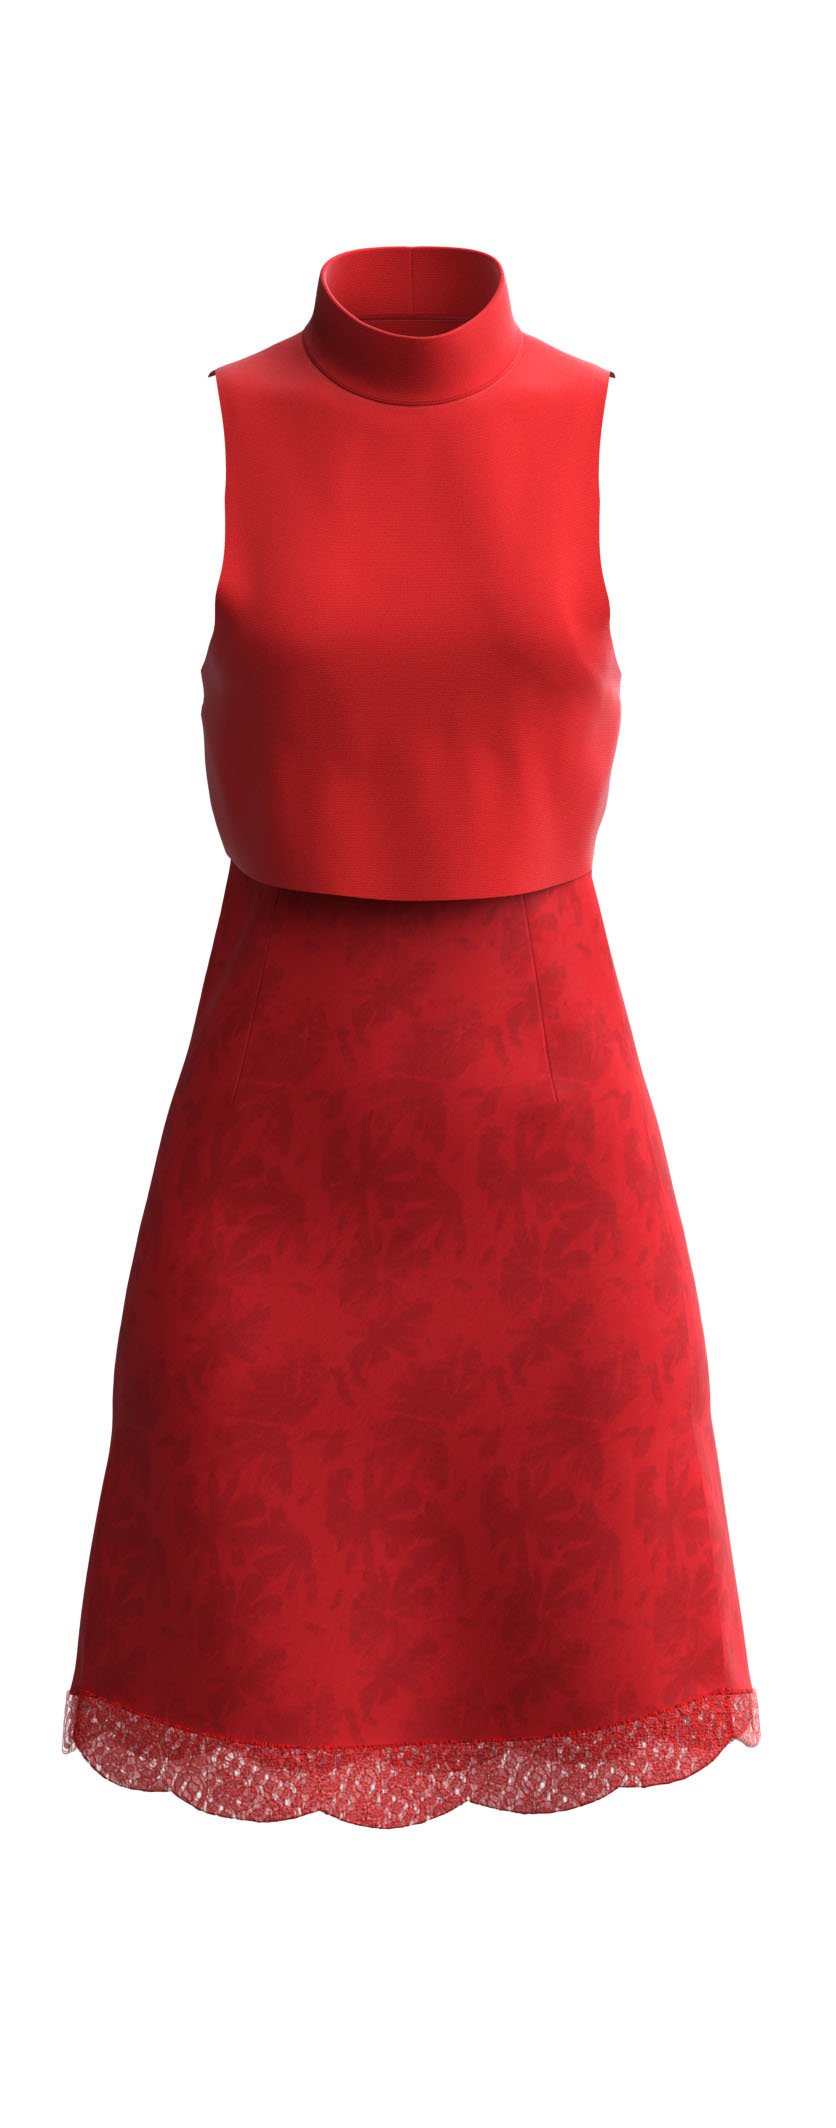 red dress - 3D Apparel Design